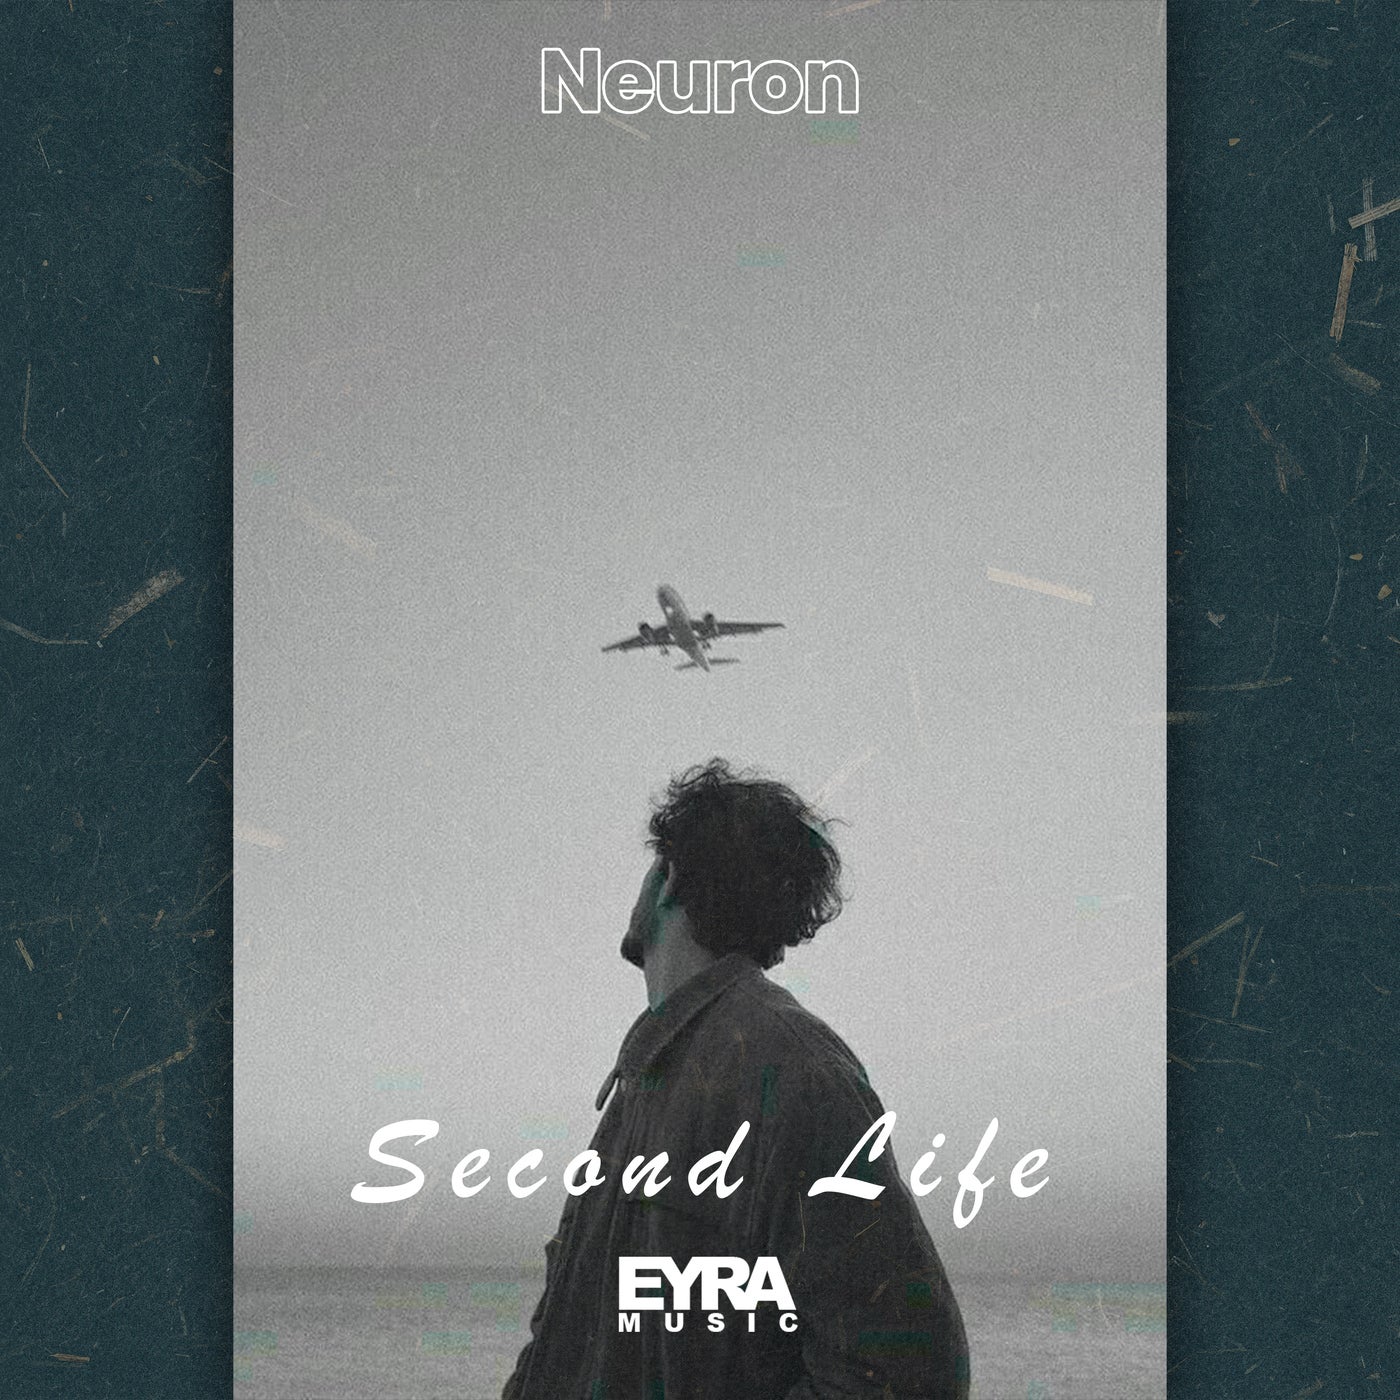 Second life